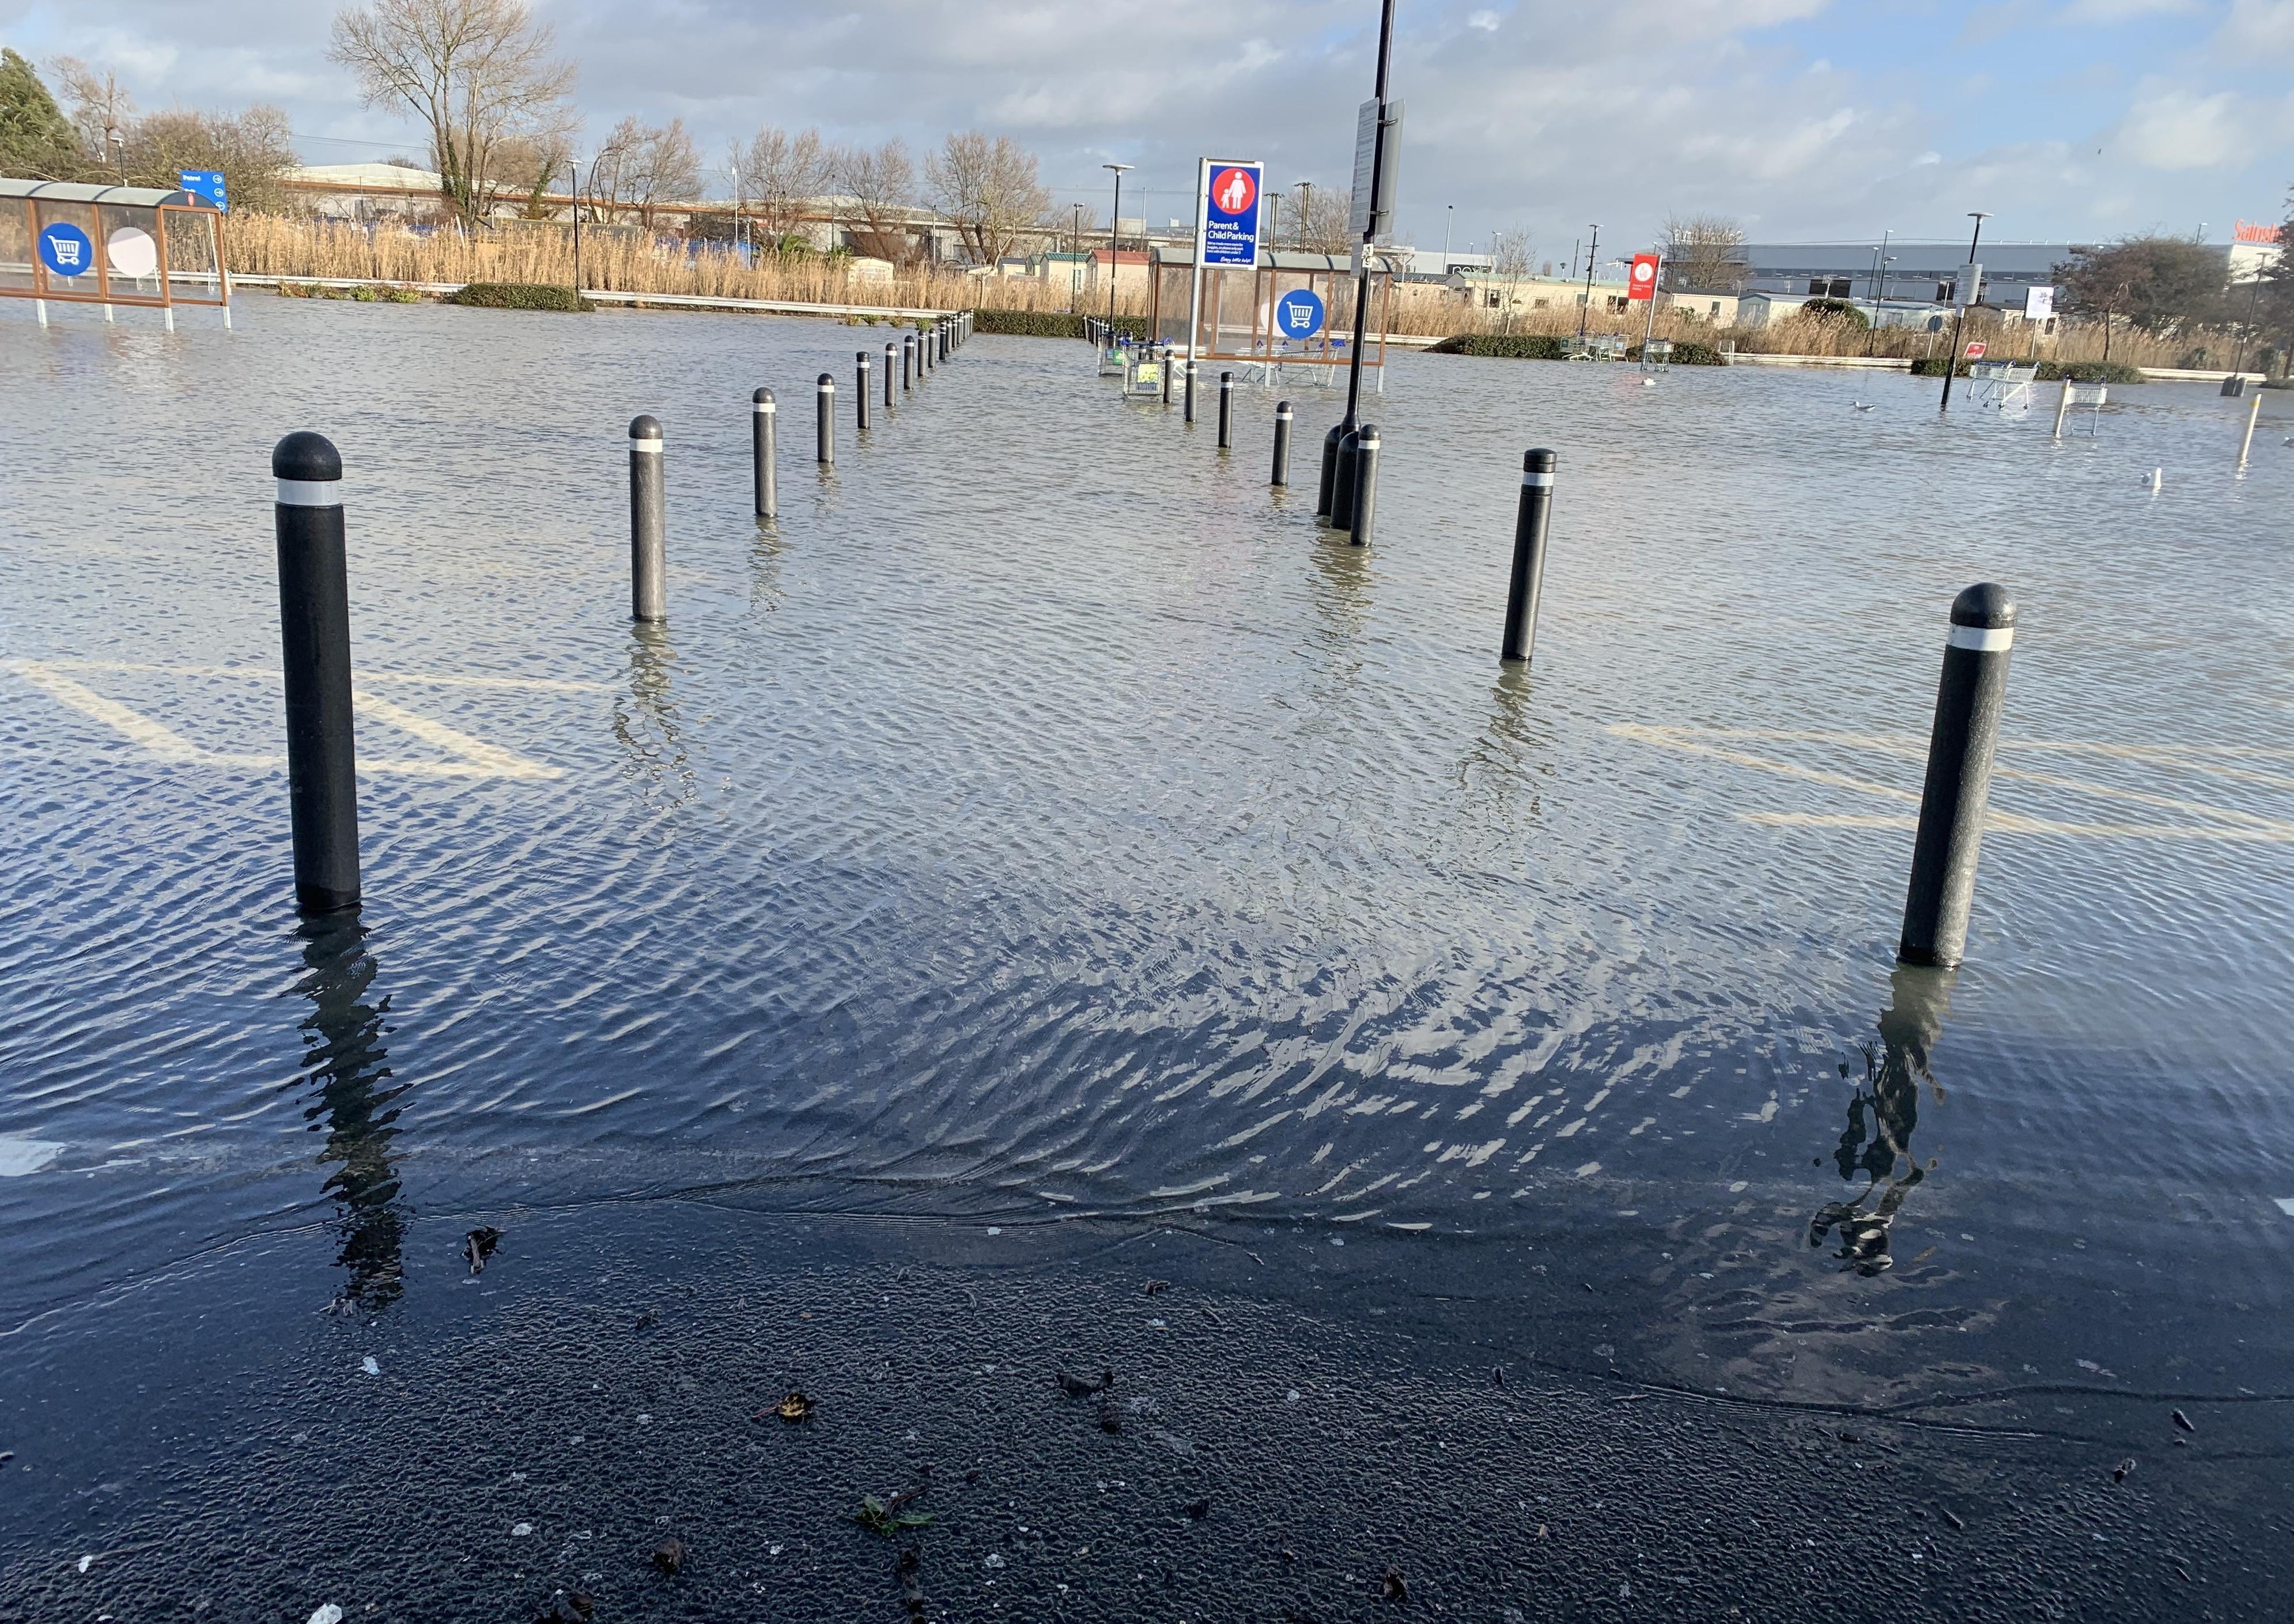 Tesco’s car park in Bognor Regis has been left under water after more flooding over the weekend. SUS-191223-143633001